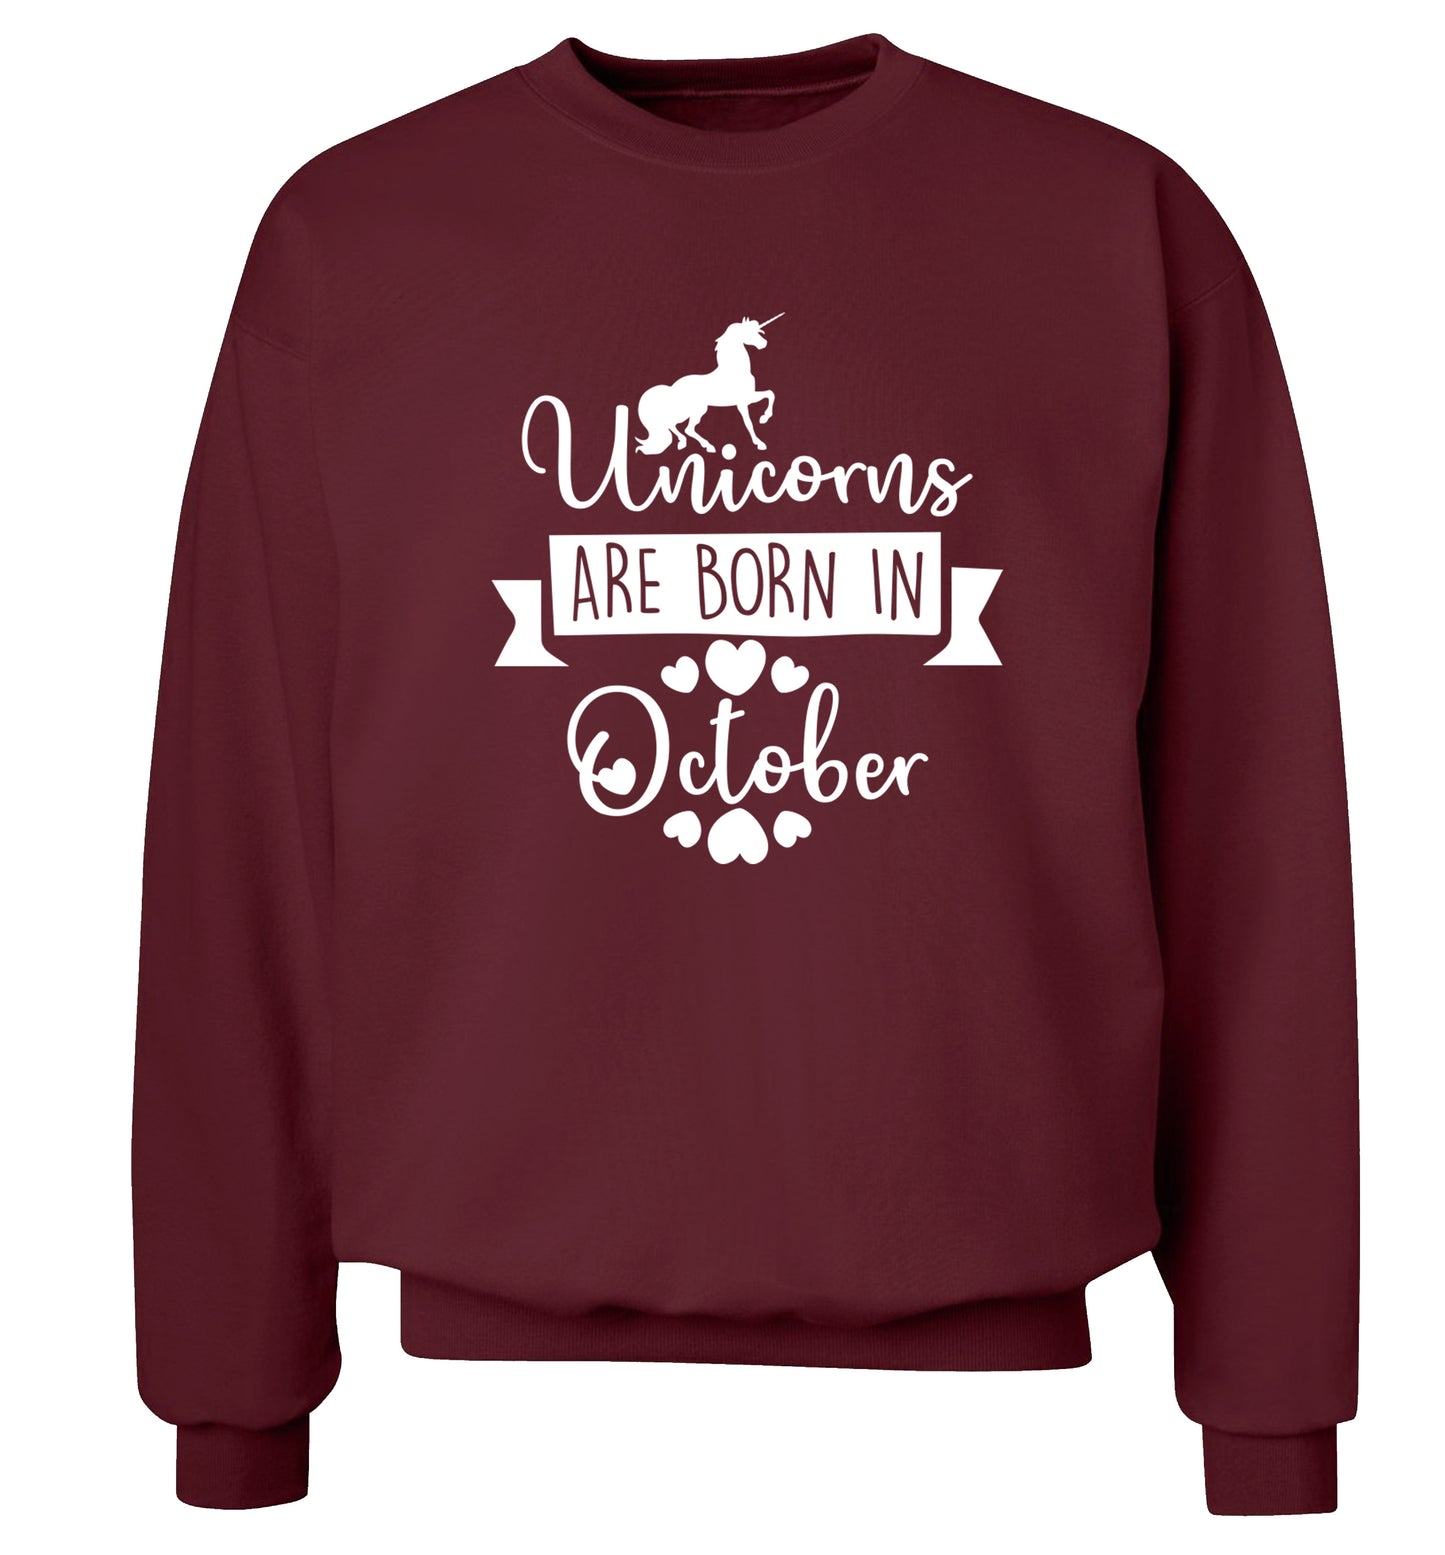 Unicorns are born in October Adult's unisex maroon Sweater 2XL